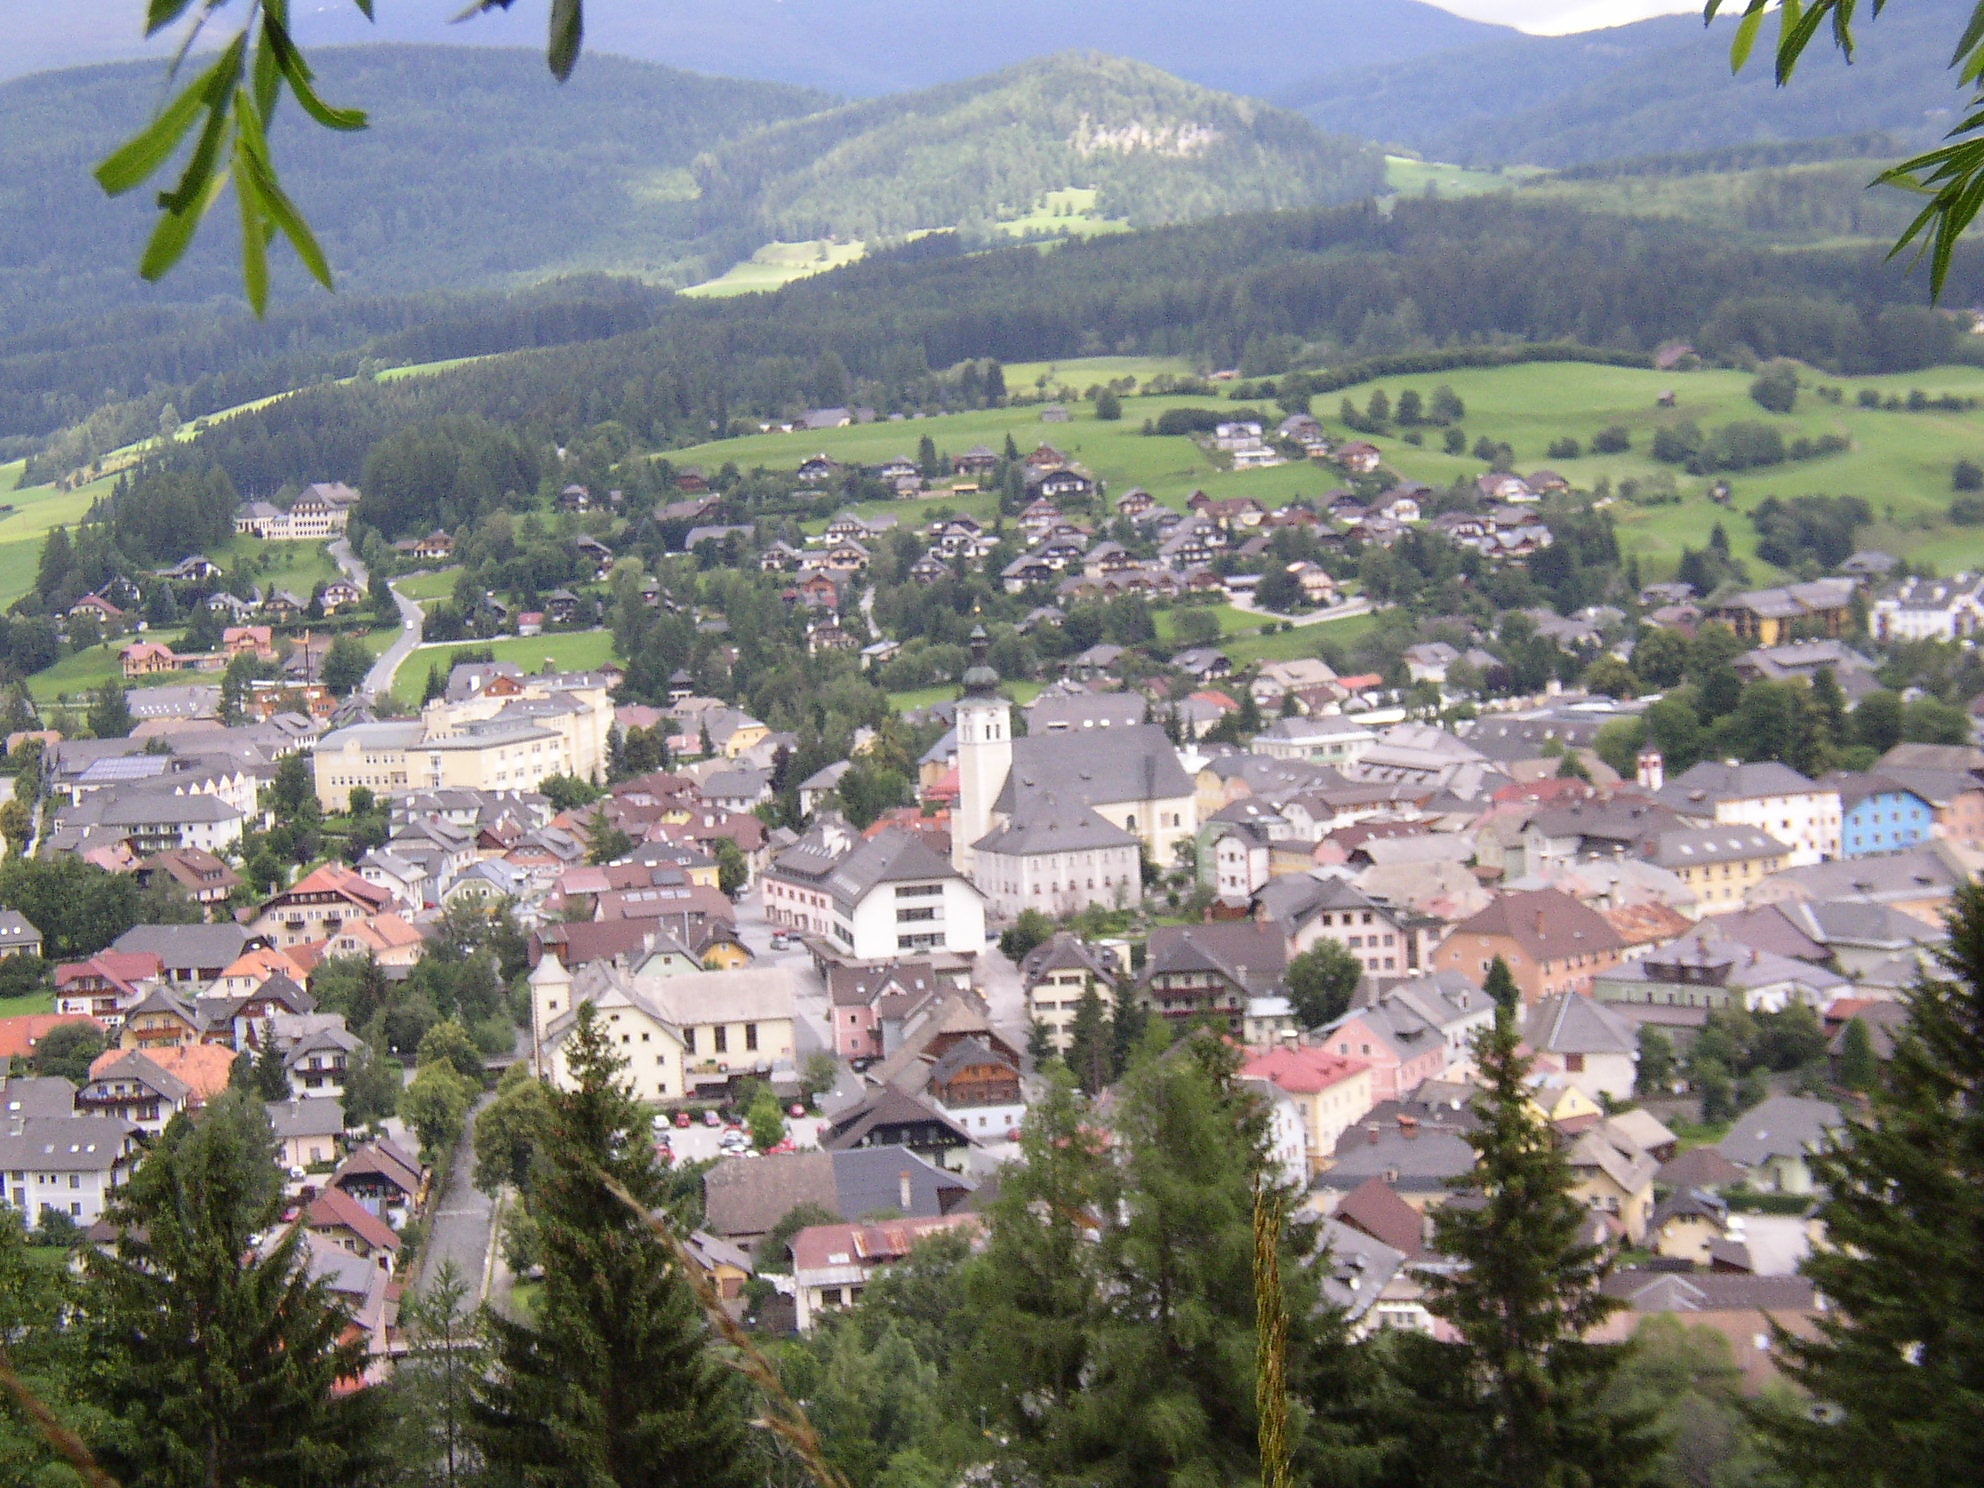 Tamsweg, Austria